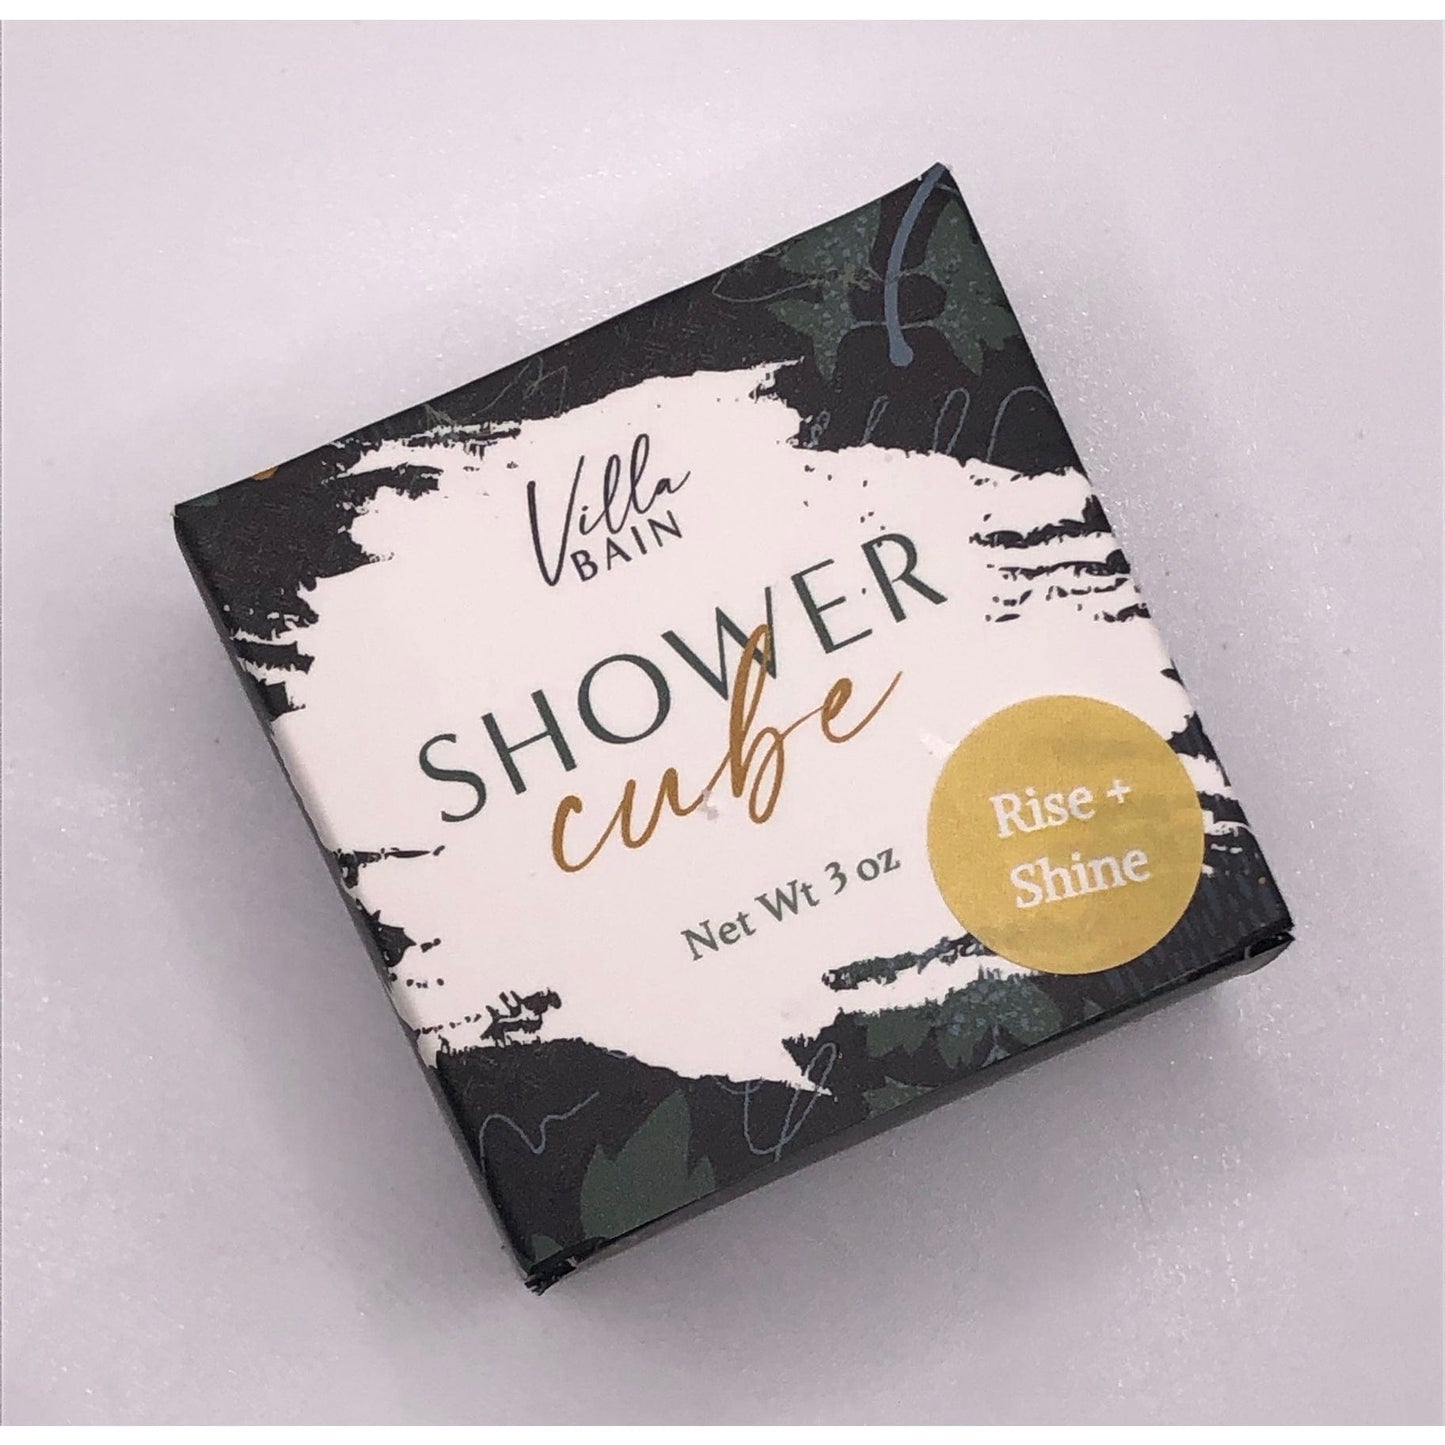 Bath Additives Shower Cube - Rise + Shine VB-RSSC